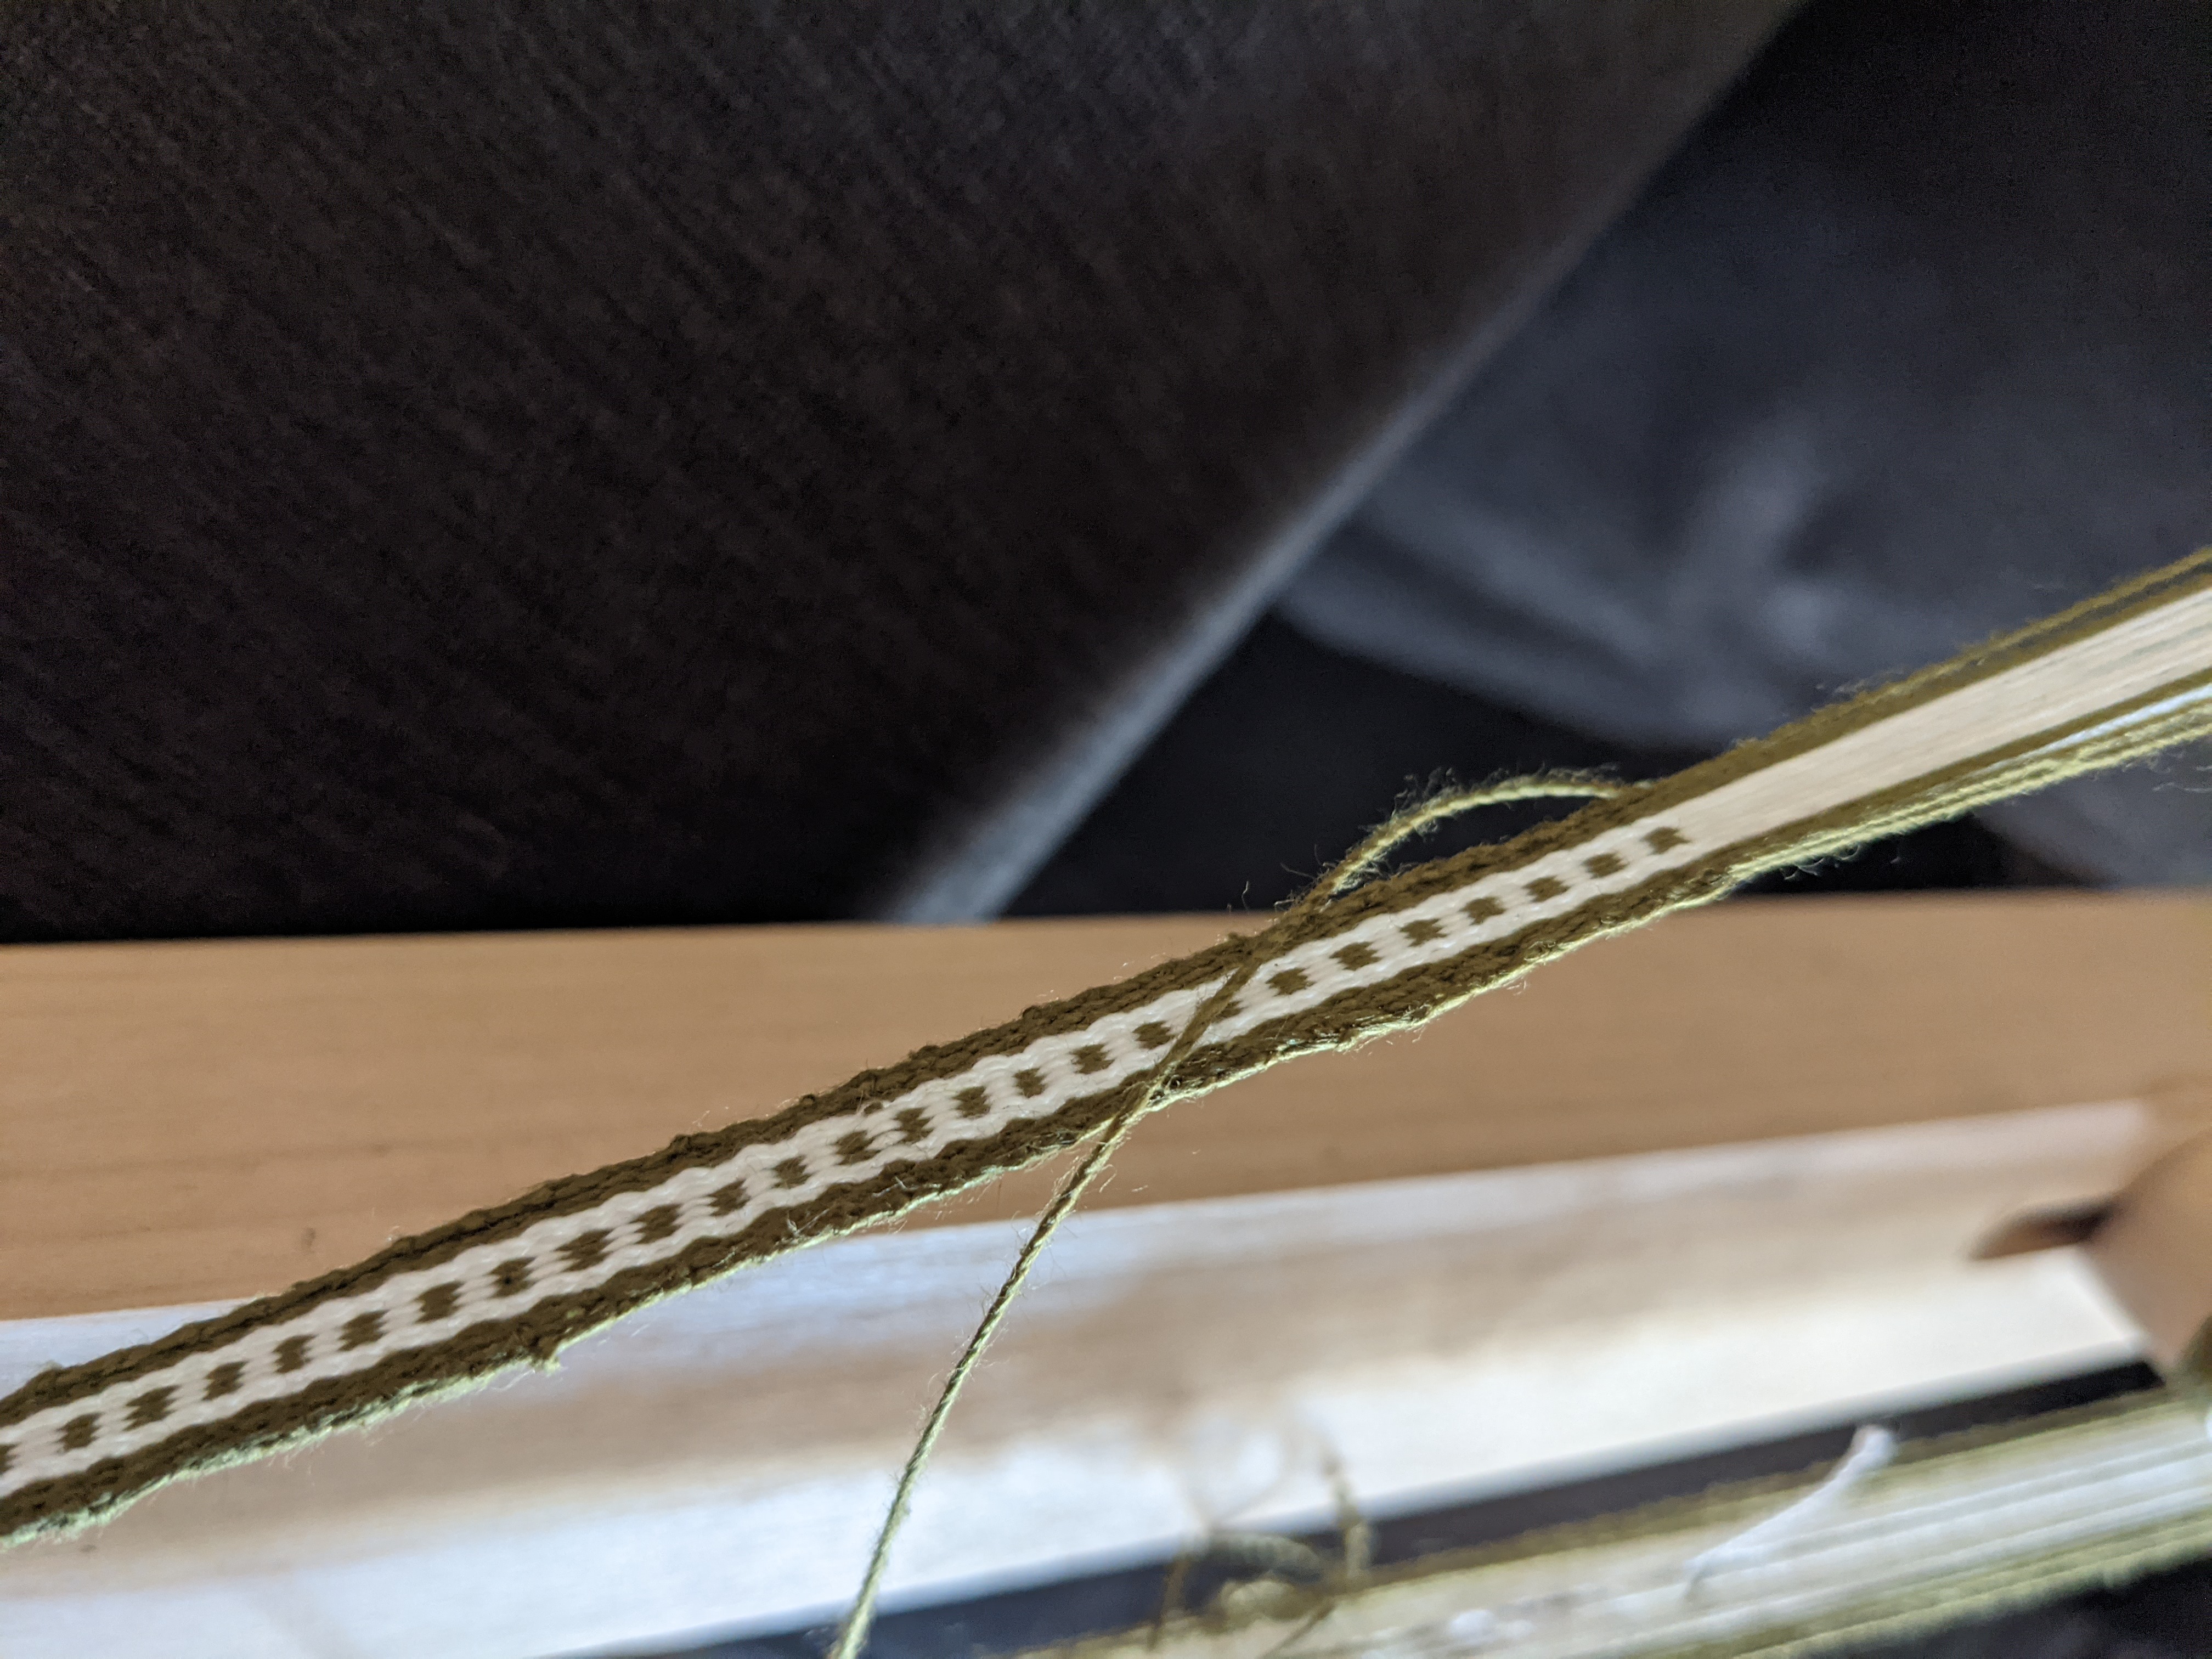 Closeup of in progress weaving